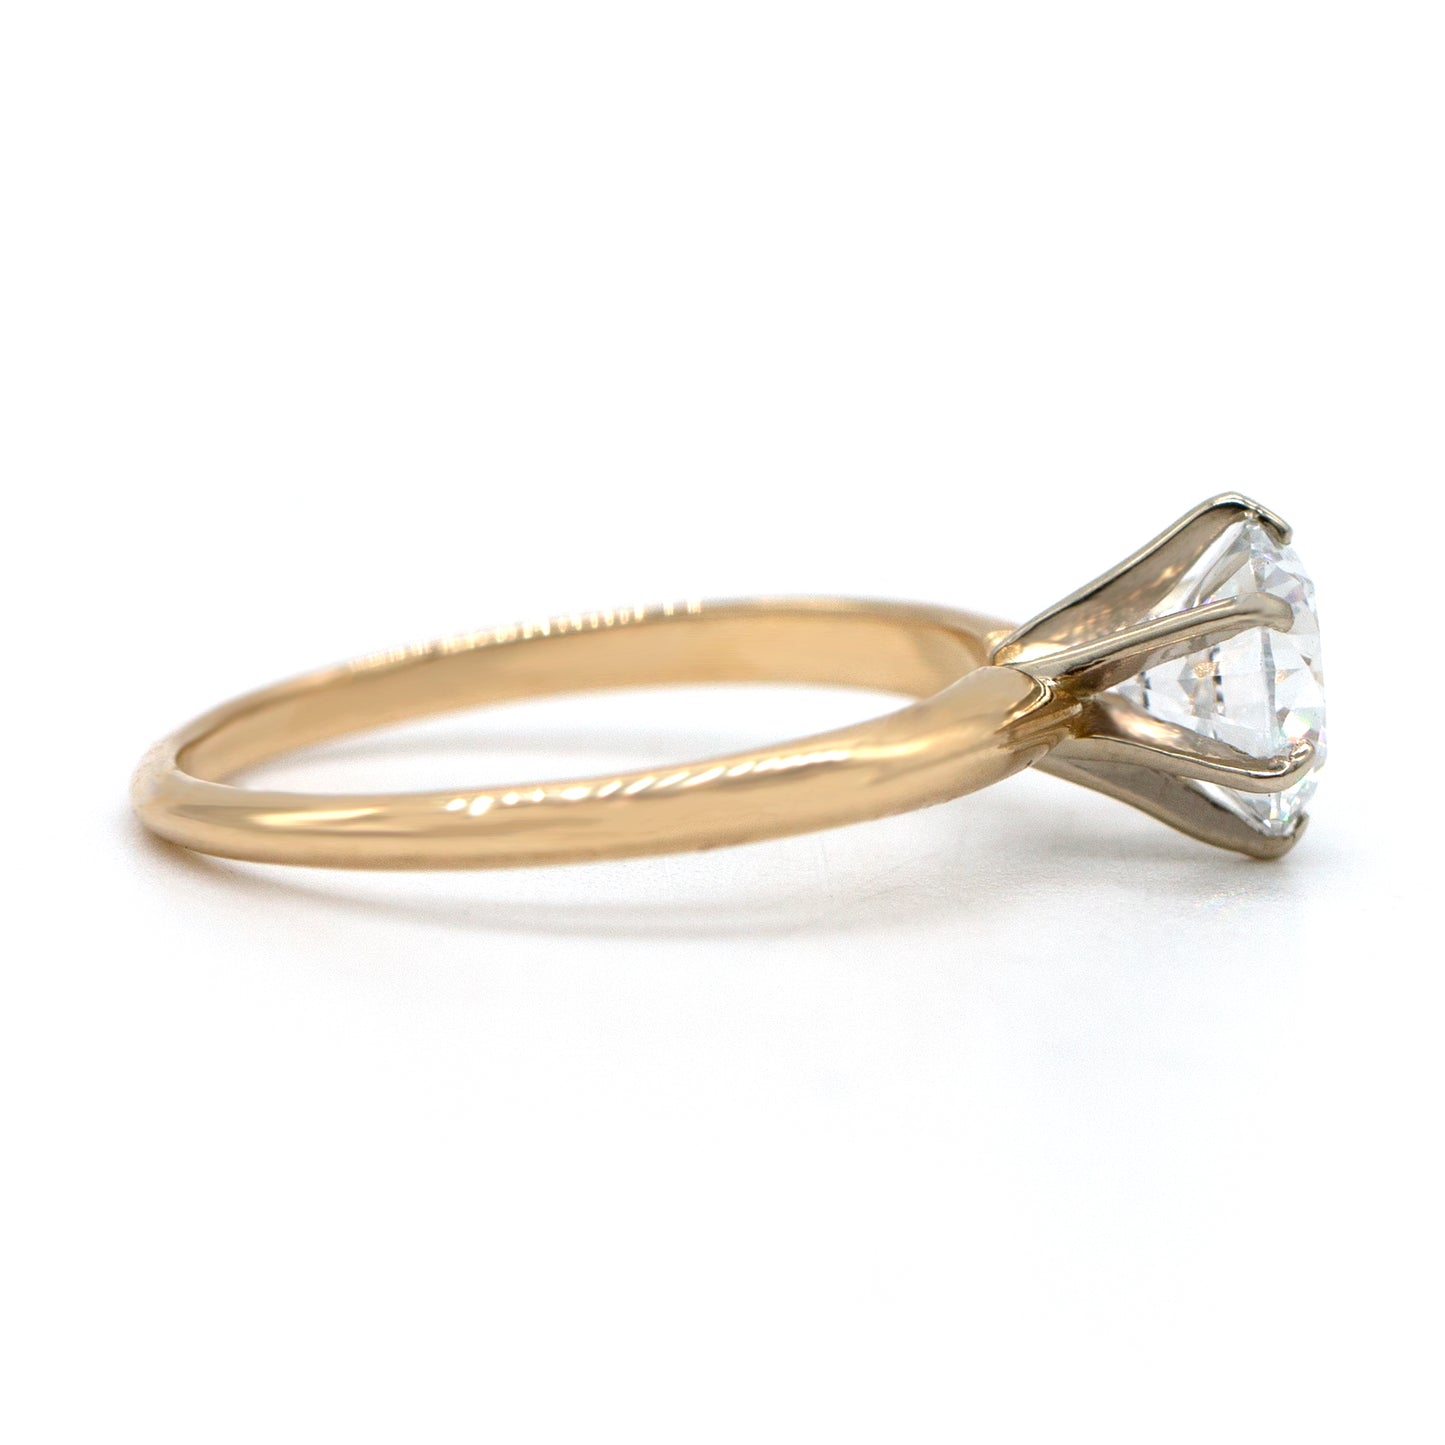 14K Gold 1.00ct LG VVS2 G-H Diamond Solitaire Ring